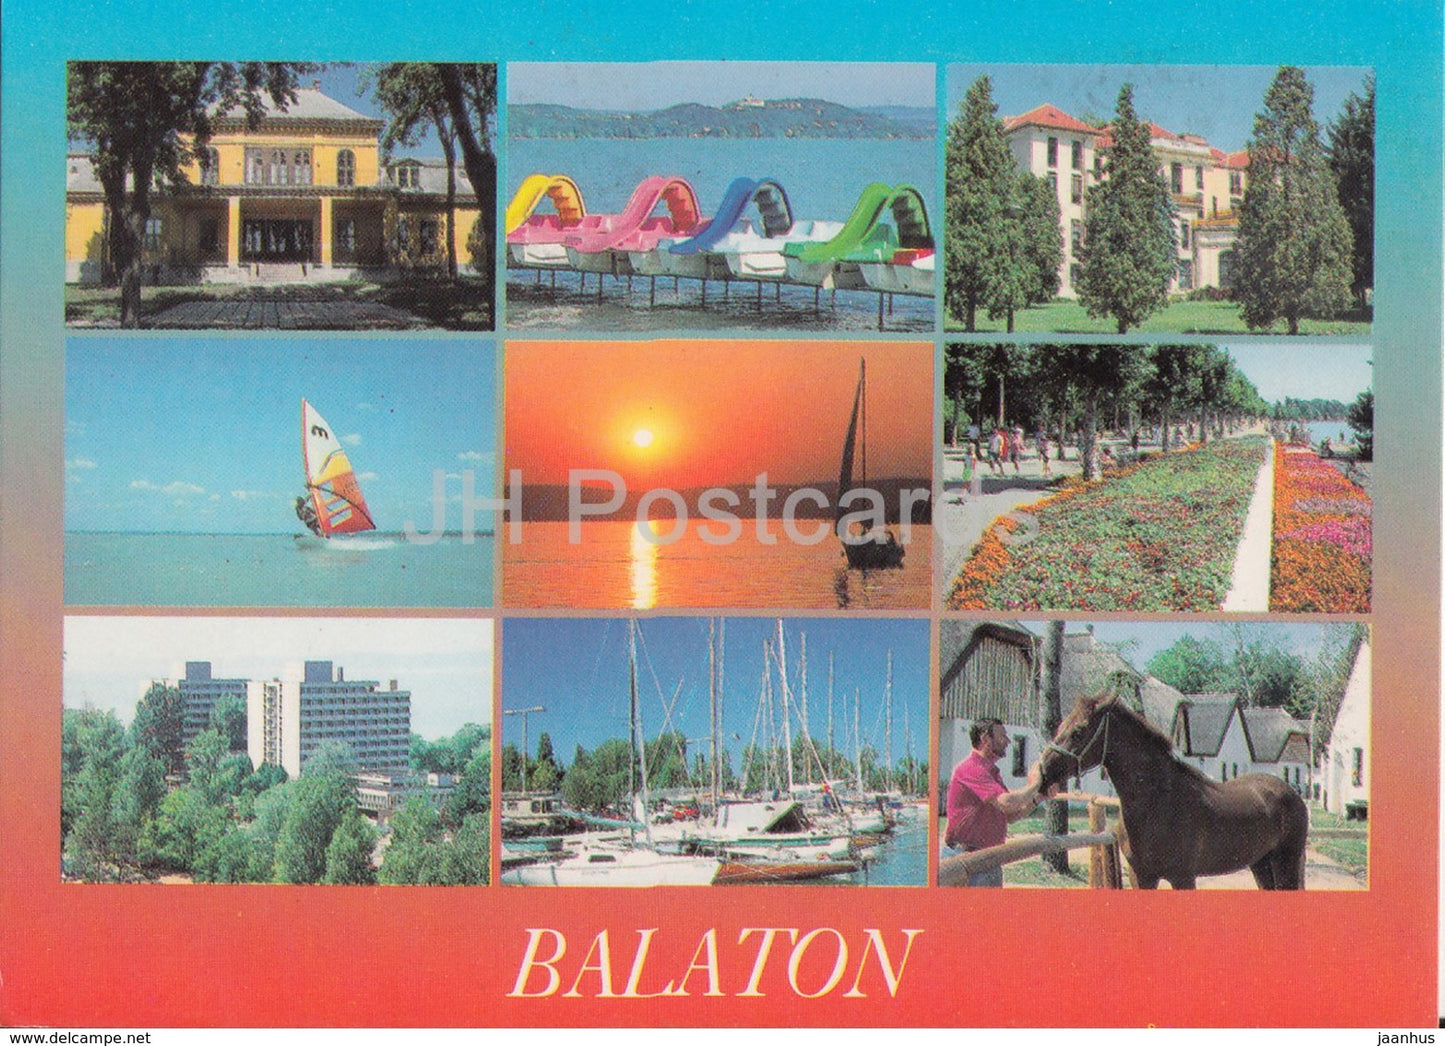 Balaton - sailing boat - windsurfing - horse - multiview - 1990s - Hungary - used - JH Postcards